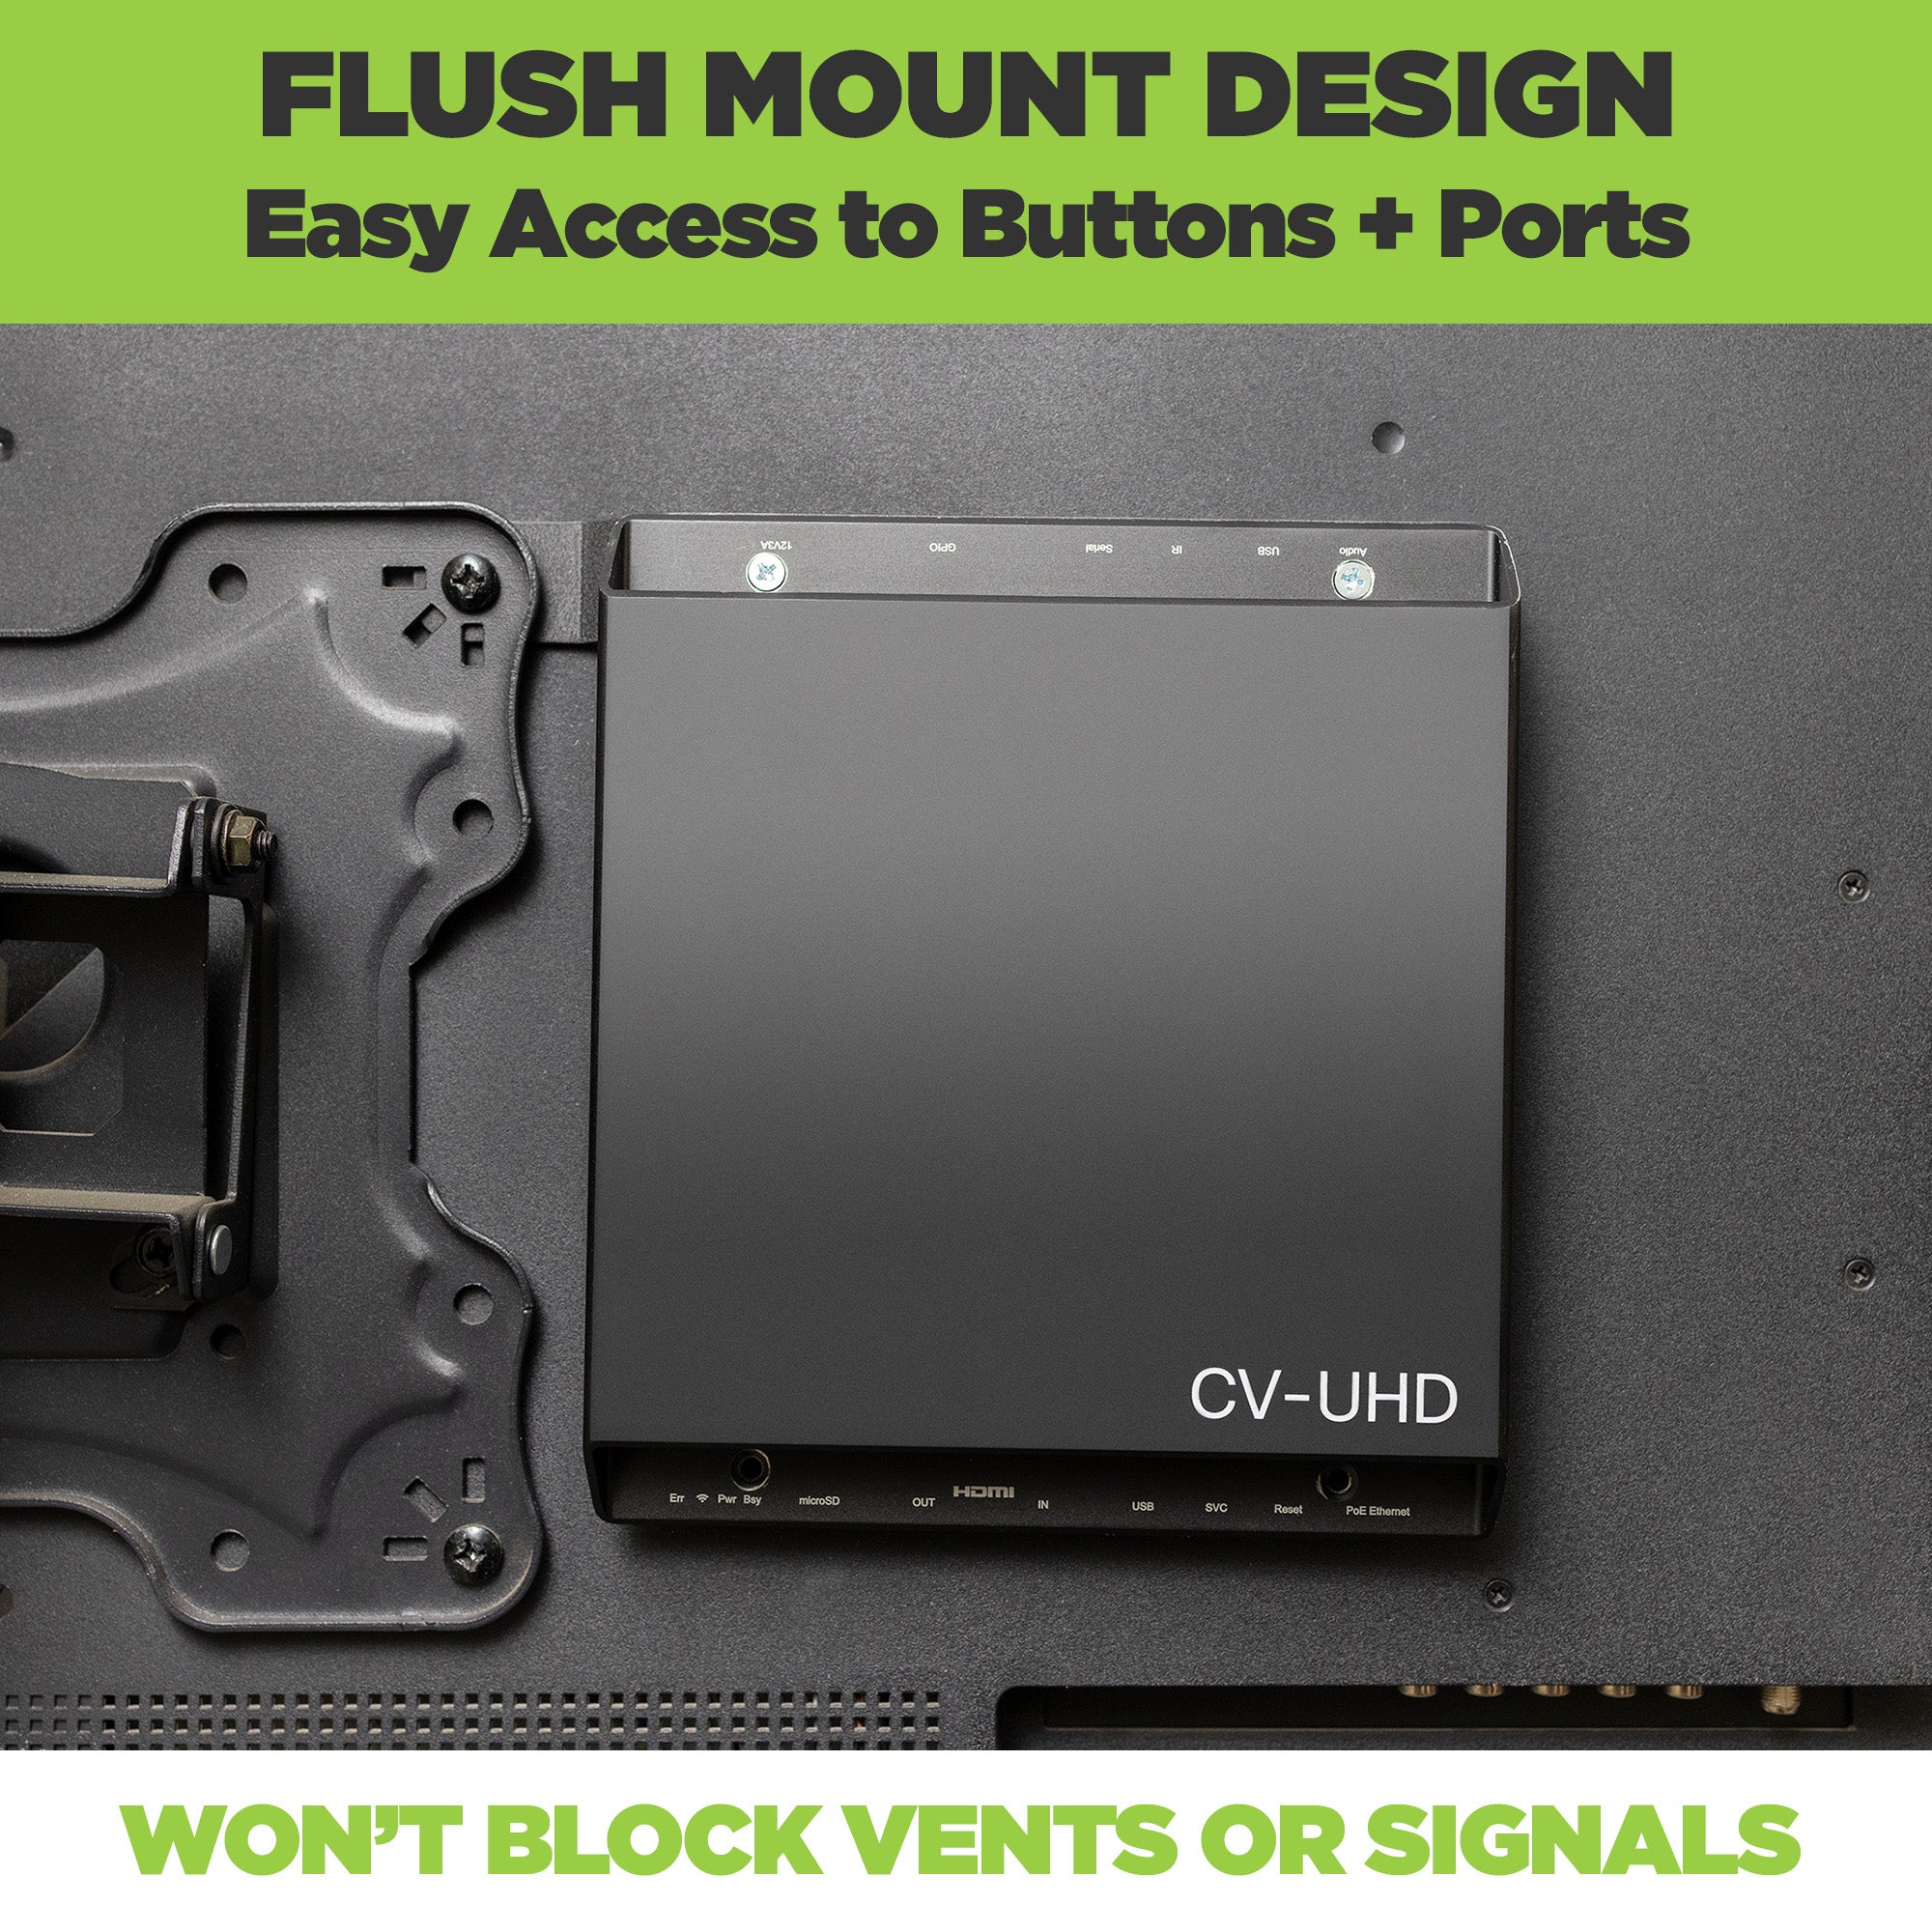 Attach CV-UHD media player to back of TV using the HIDEit Cisco Vision VESA Mount Bar.